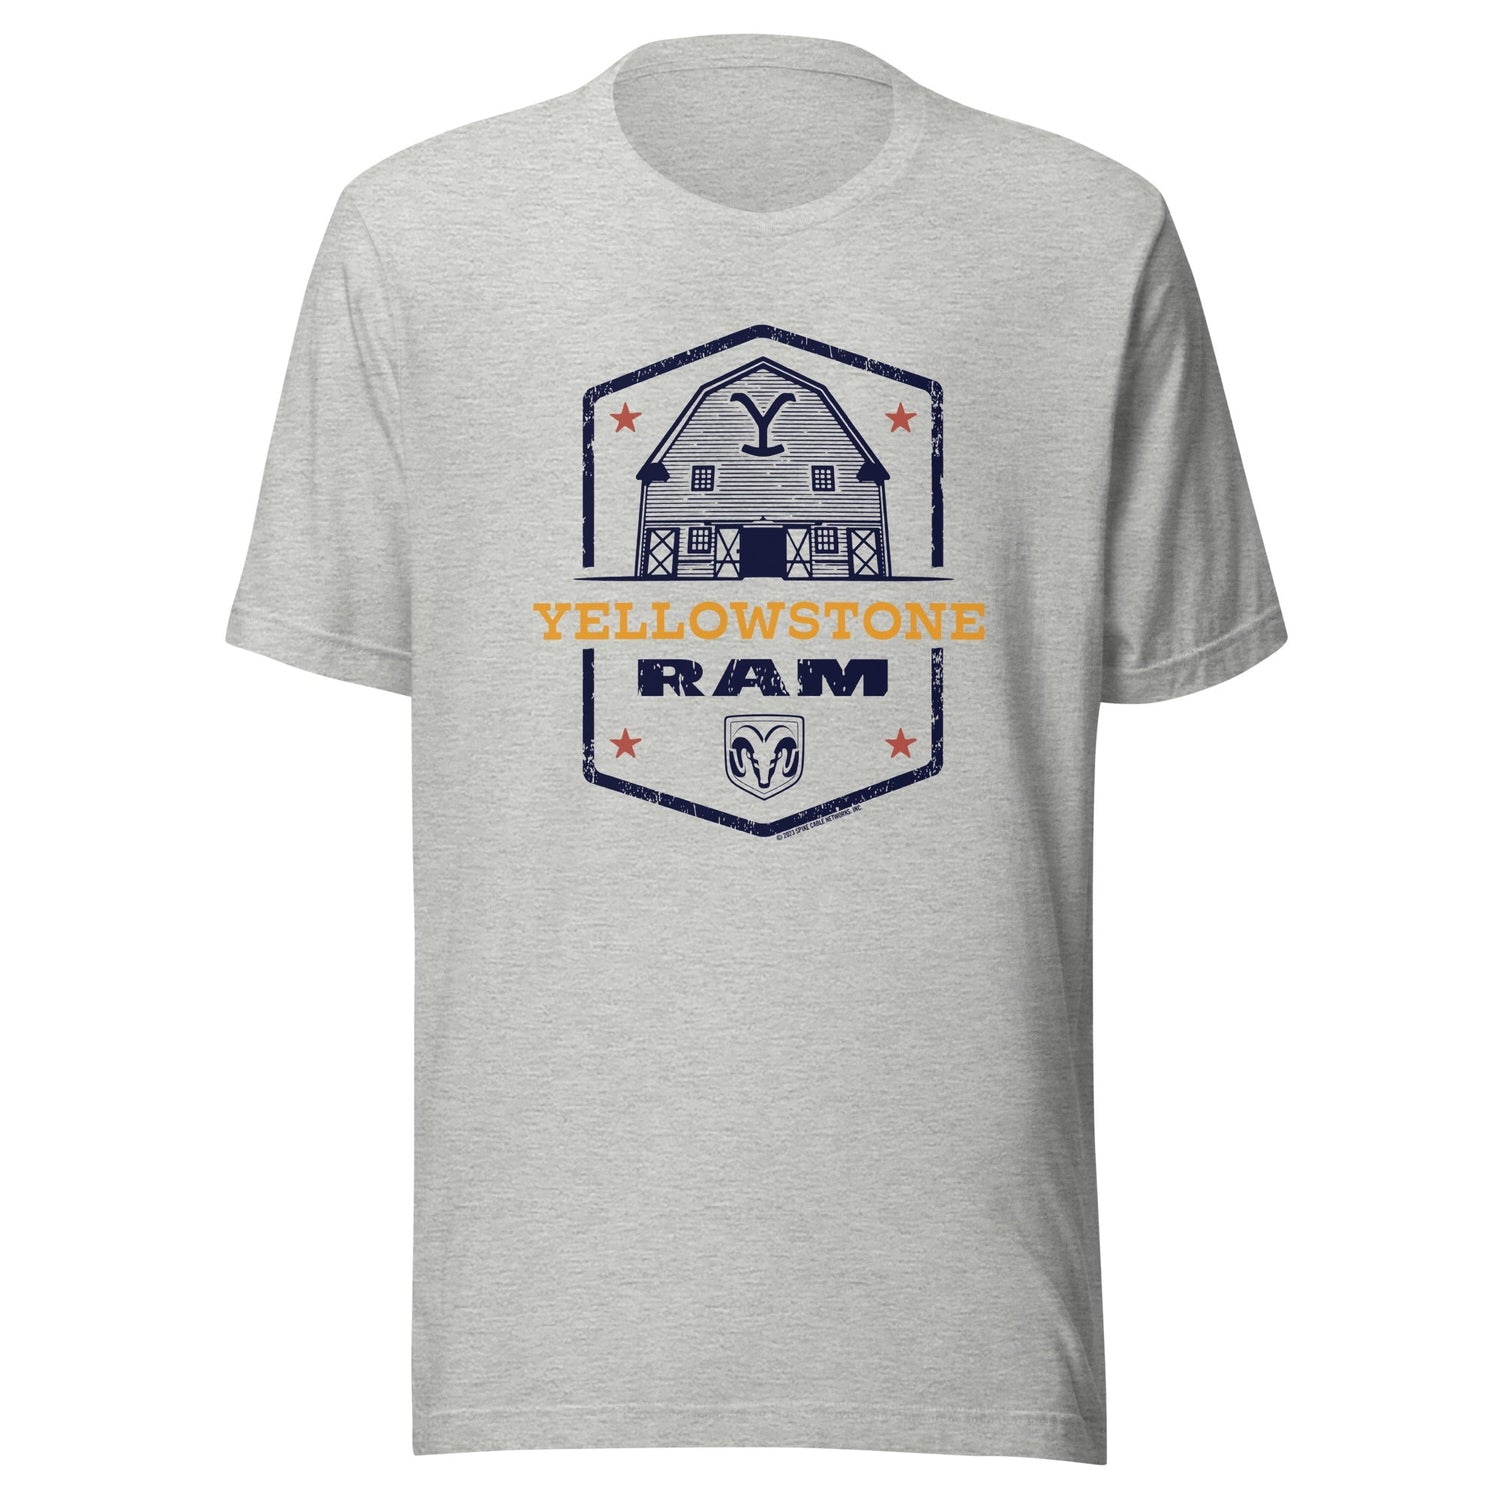 Yellowstone x Ram Barn T - Shirt - Paramount Shop